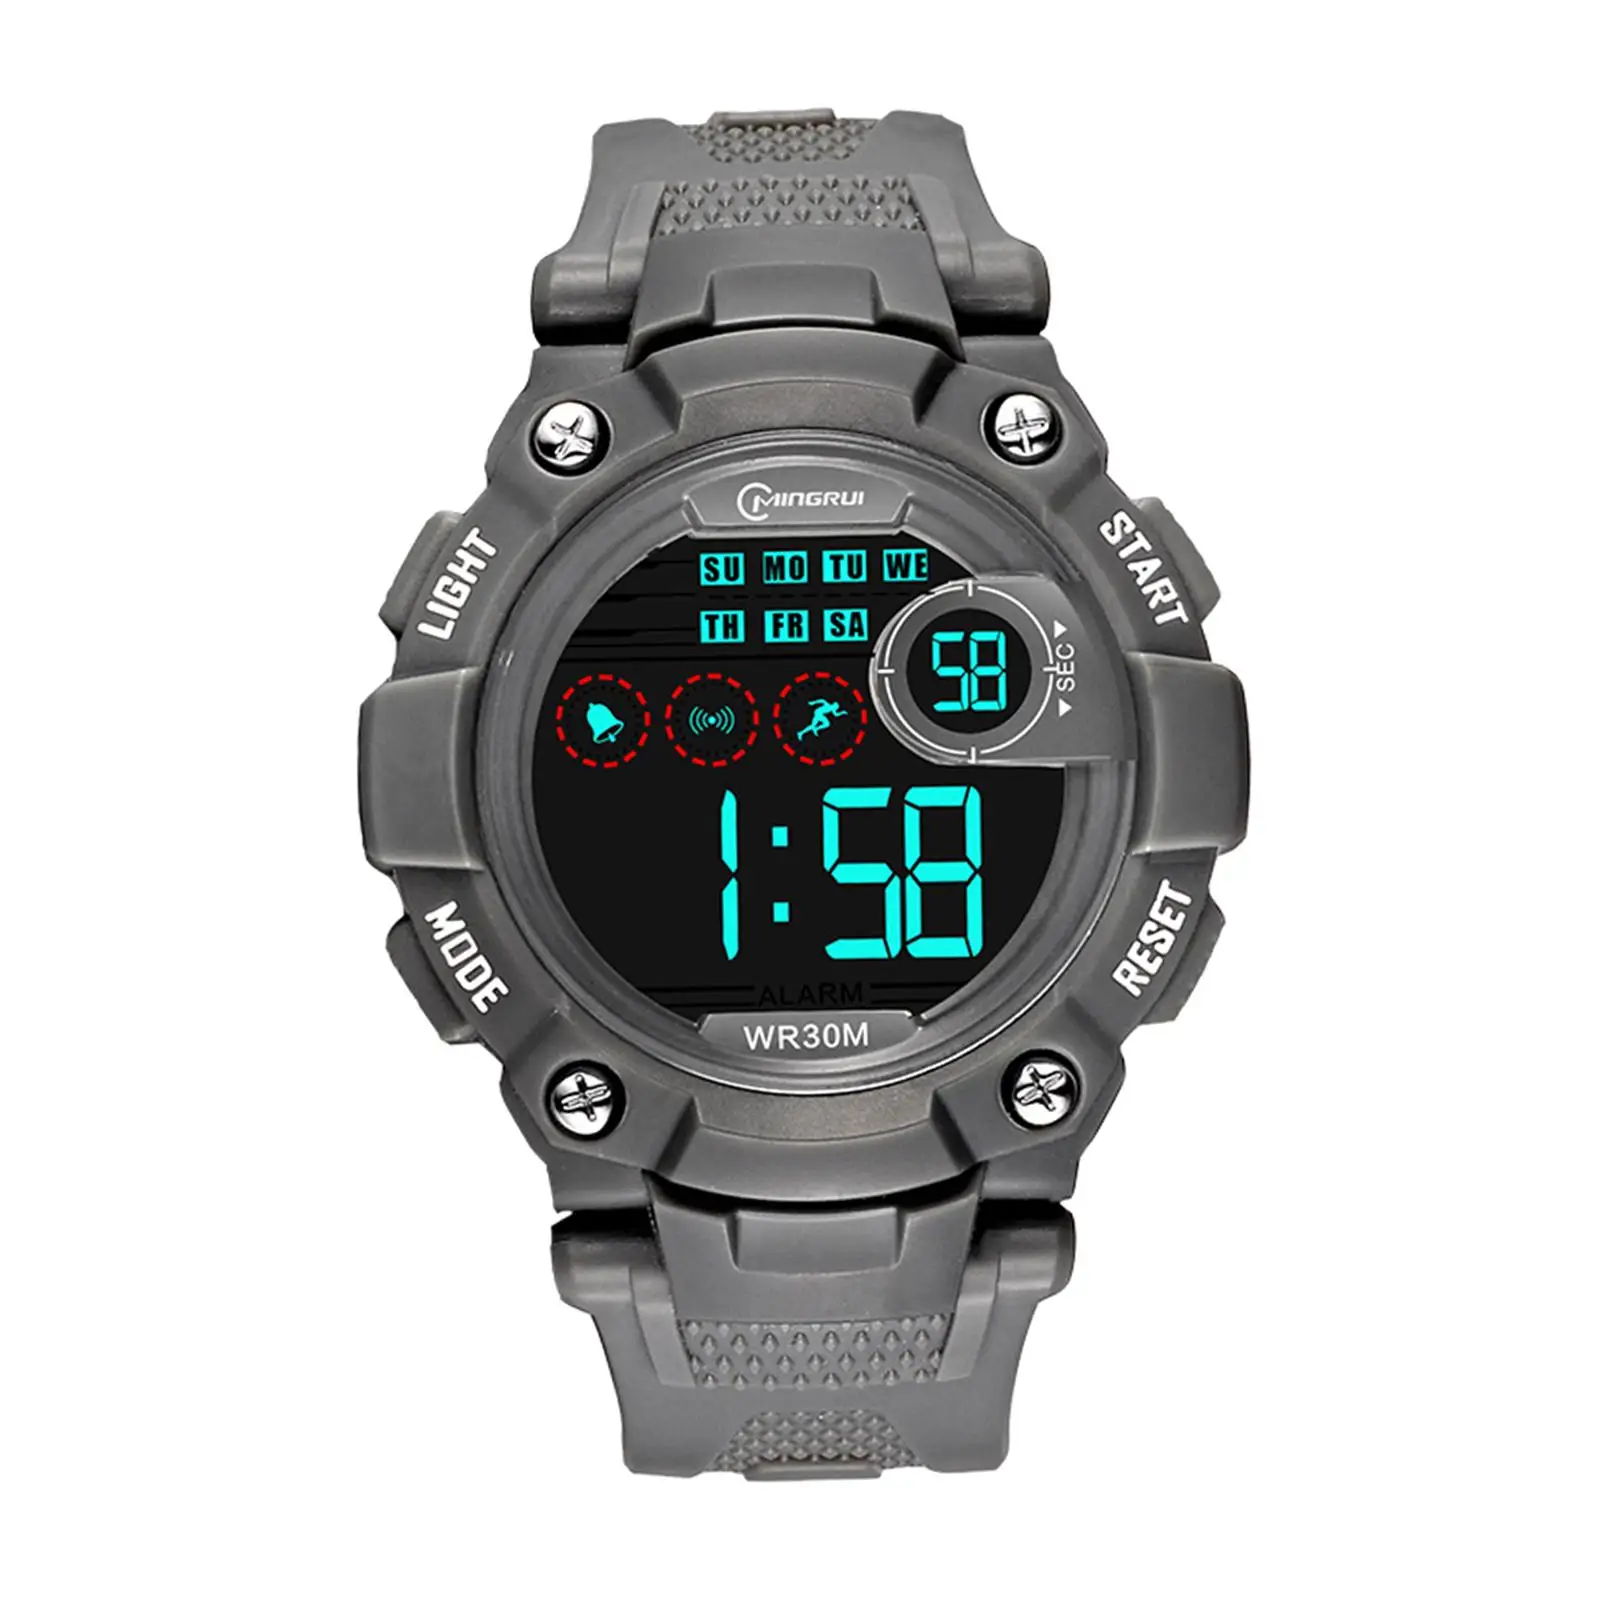 Electronic Watch Waterproof Chronograph Alarm Stopwatch Luminous Digital Watch Wrist Watch for Sports Outdoor Male Boys Student